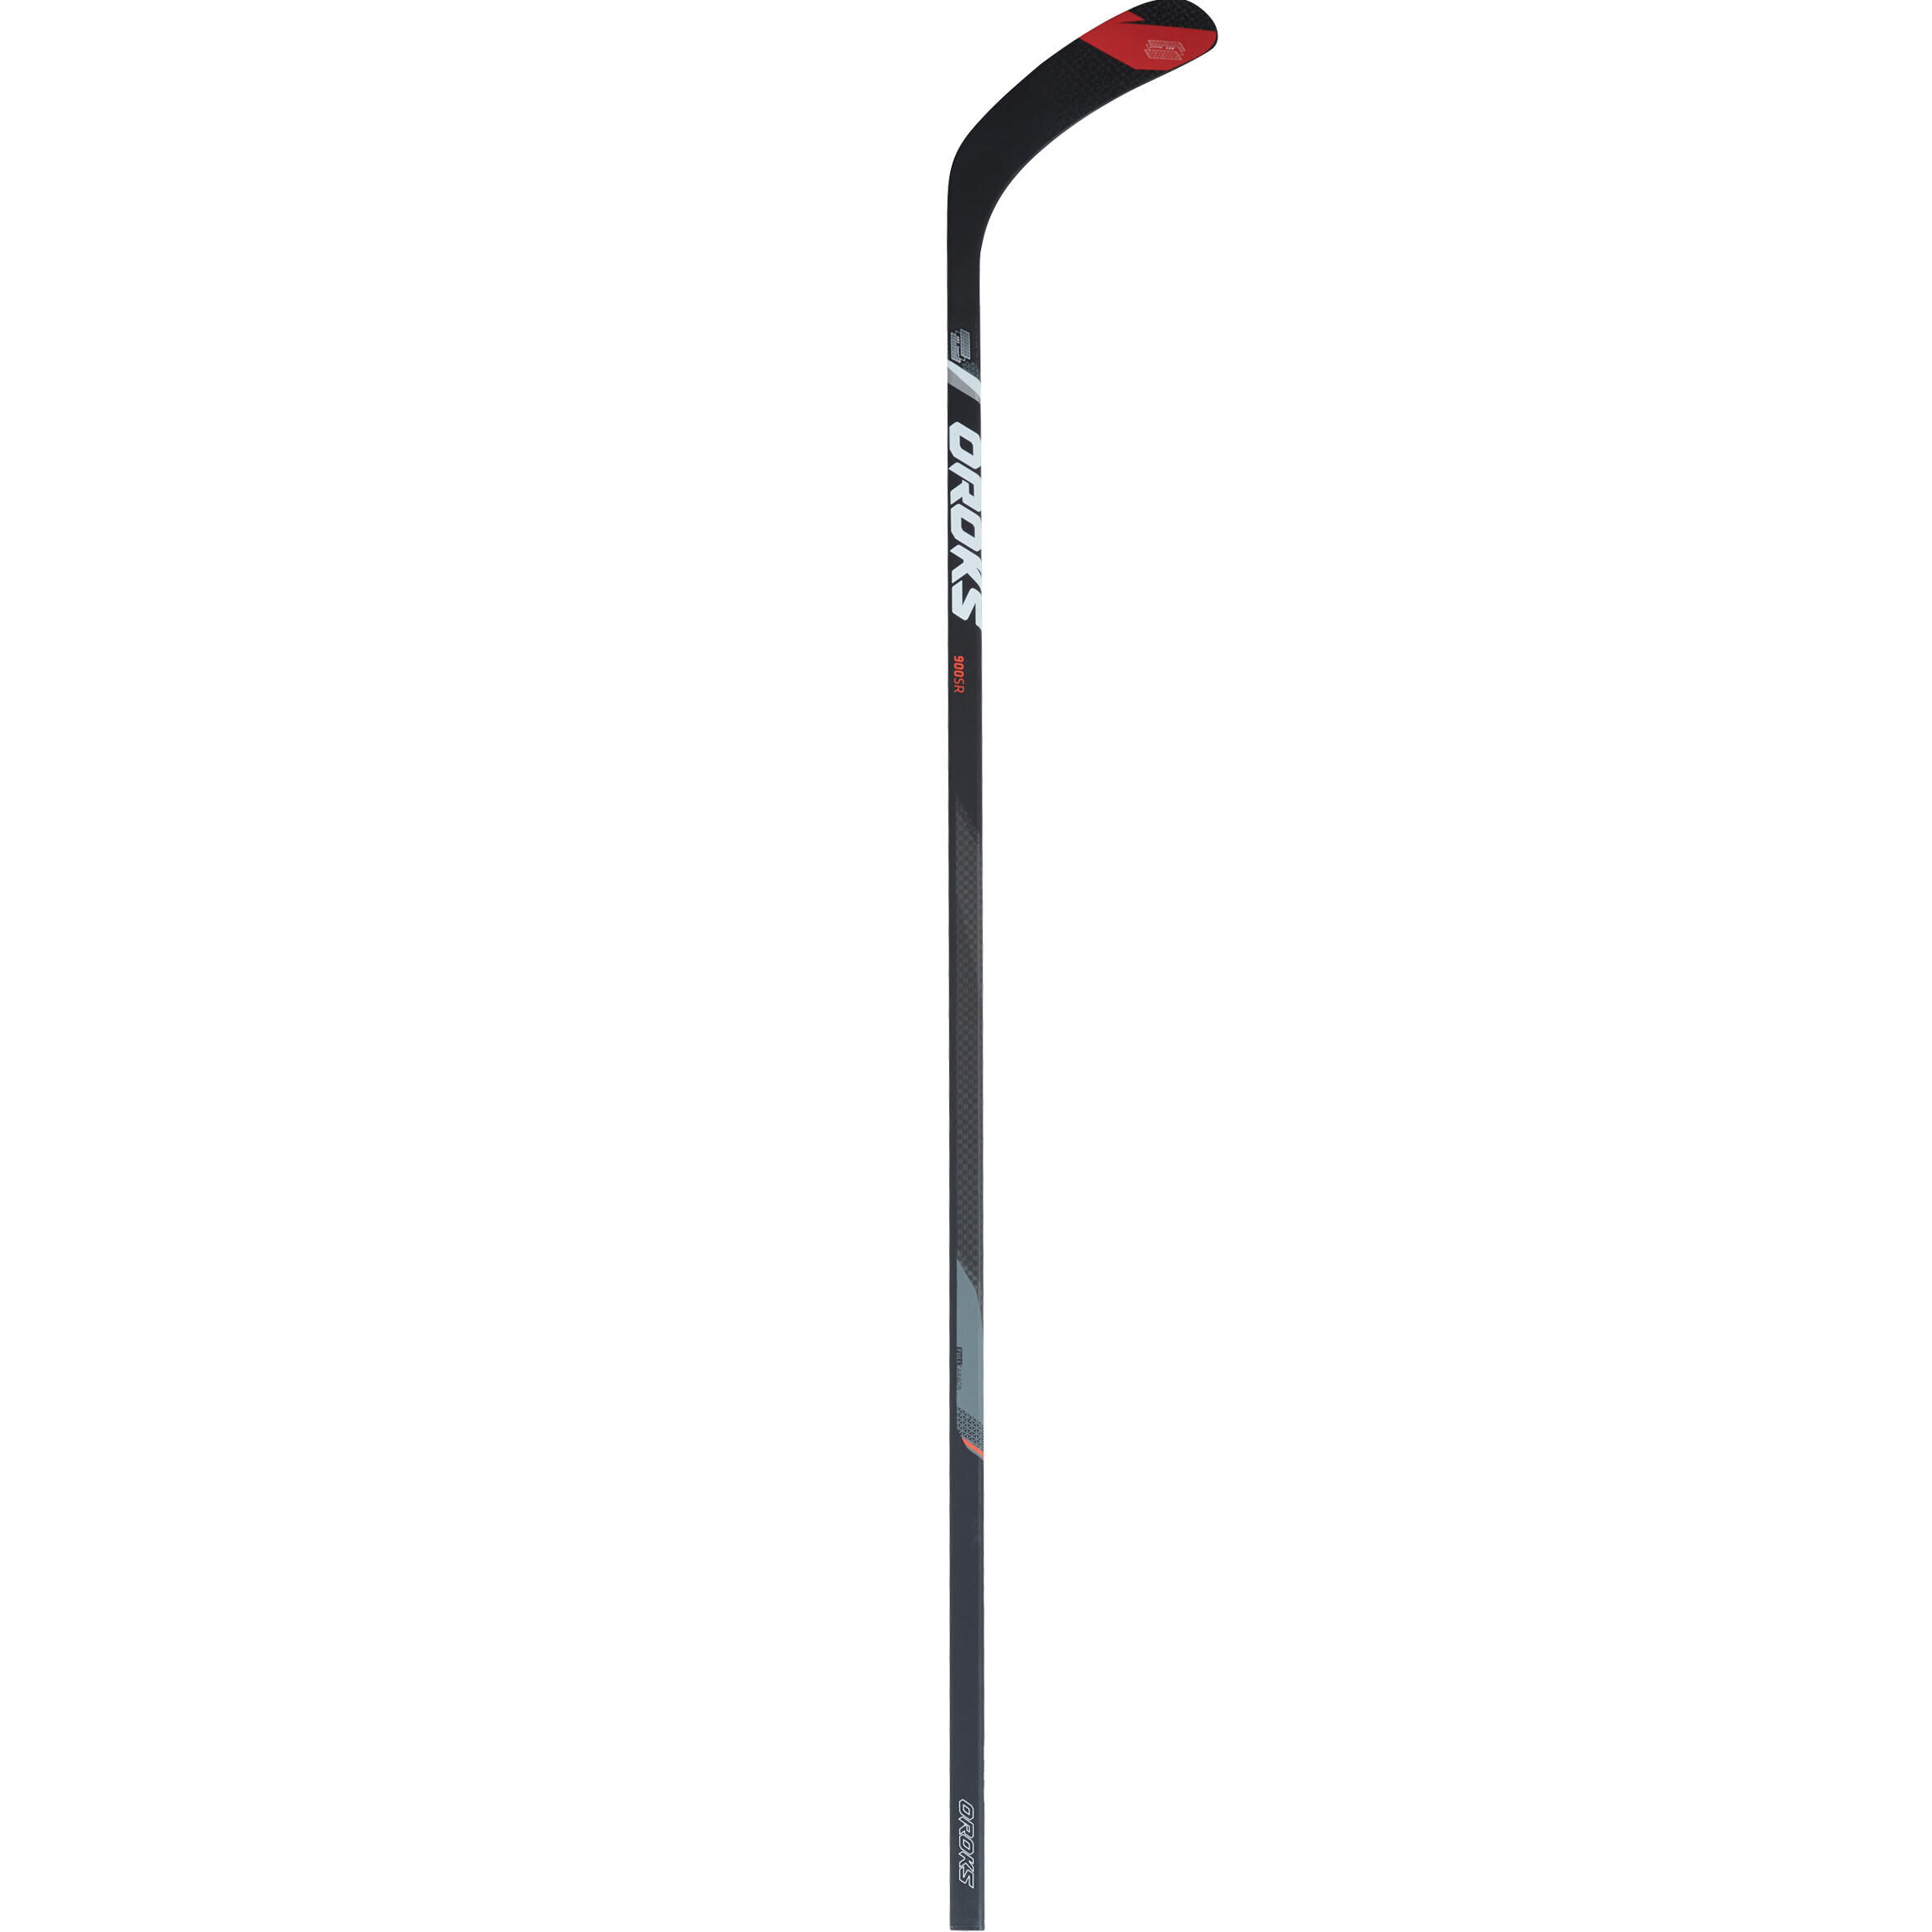 OROKS Hockey Stick IH 900 Int 65 - Left